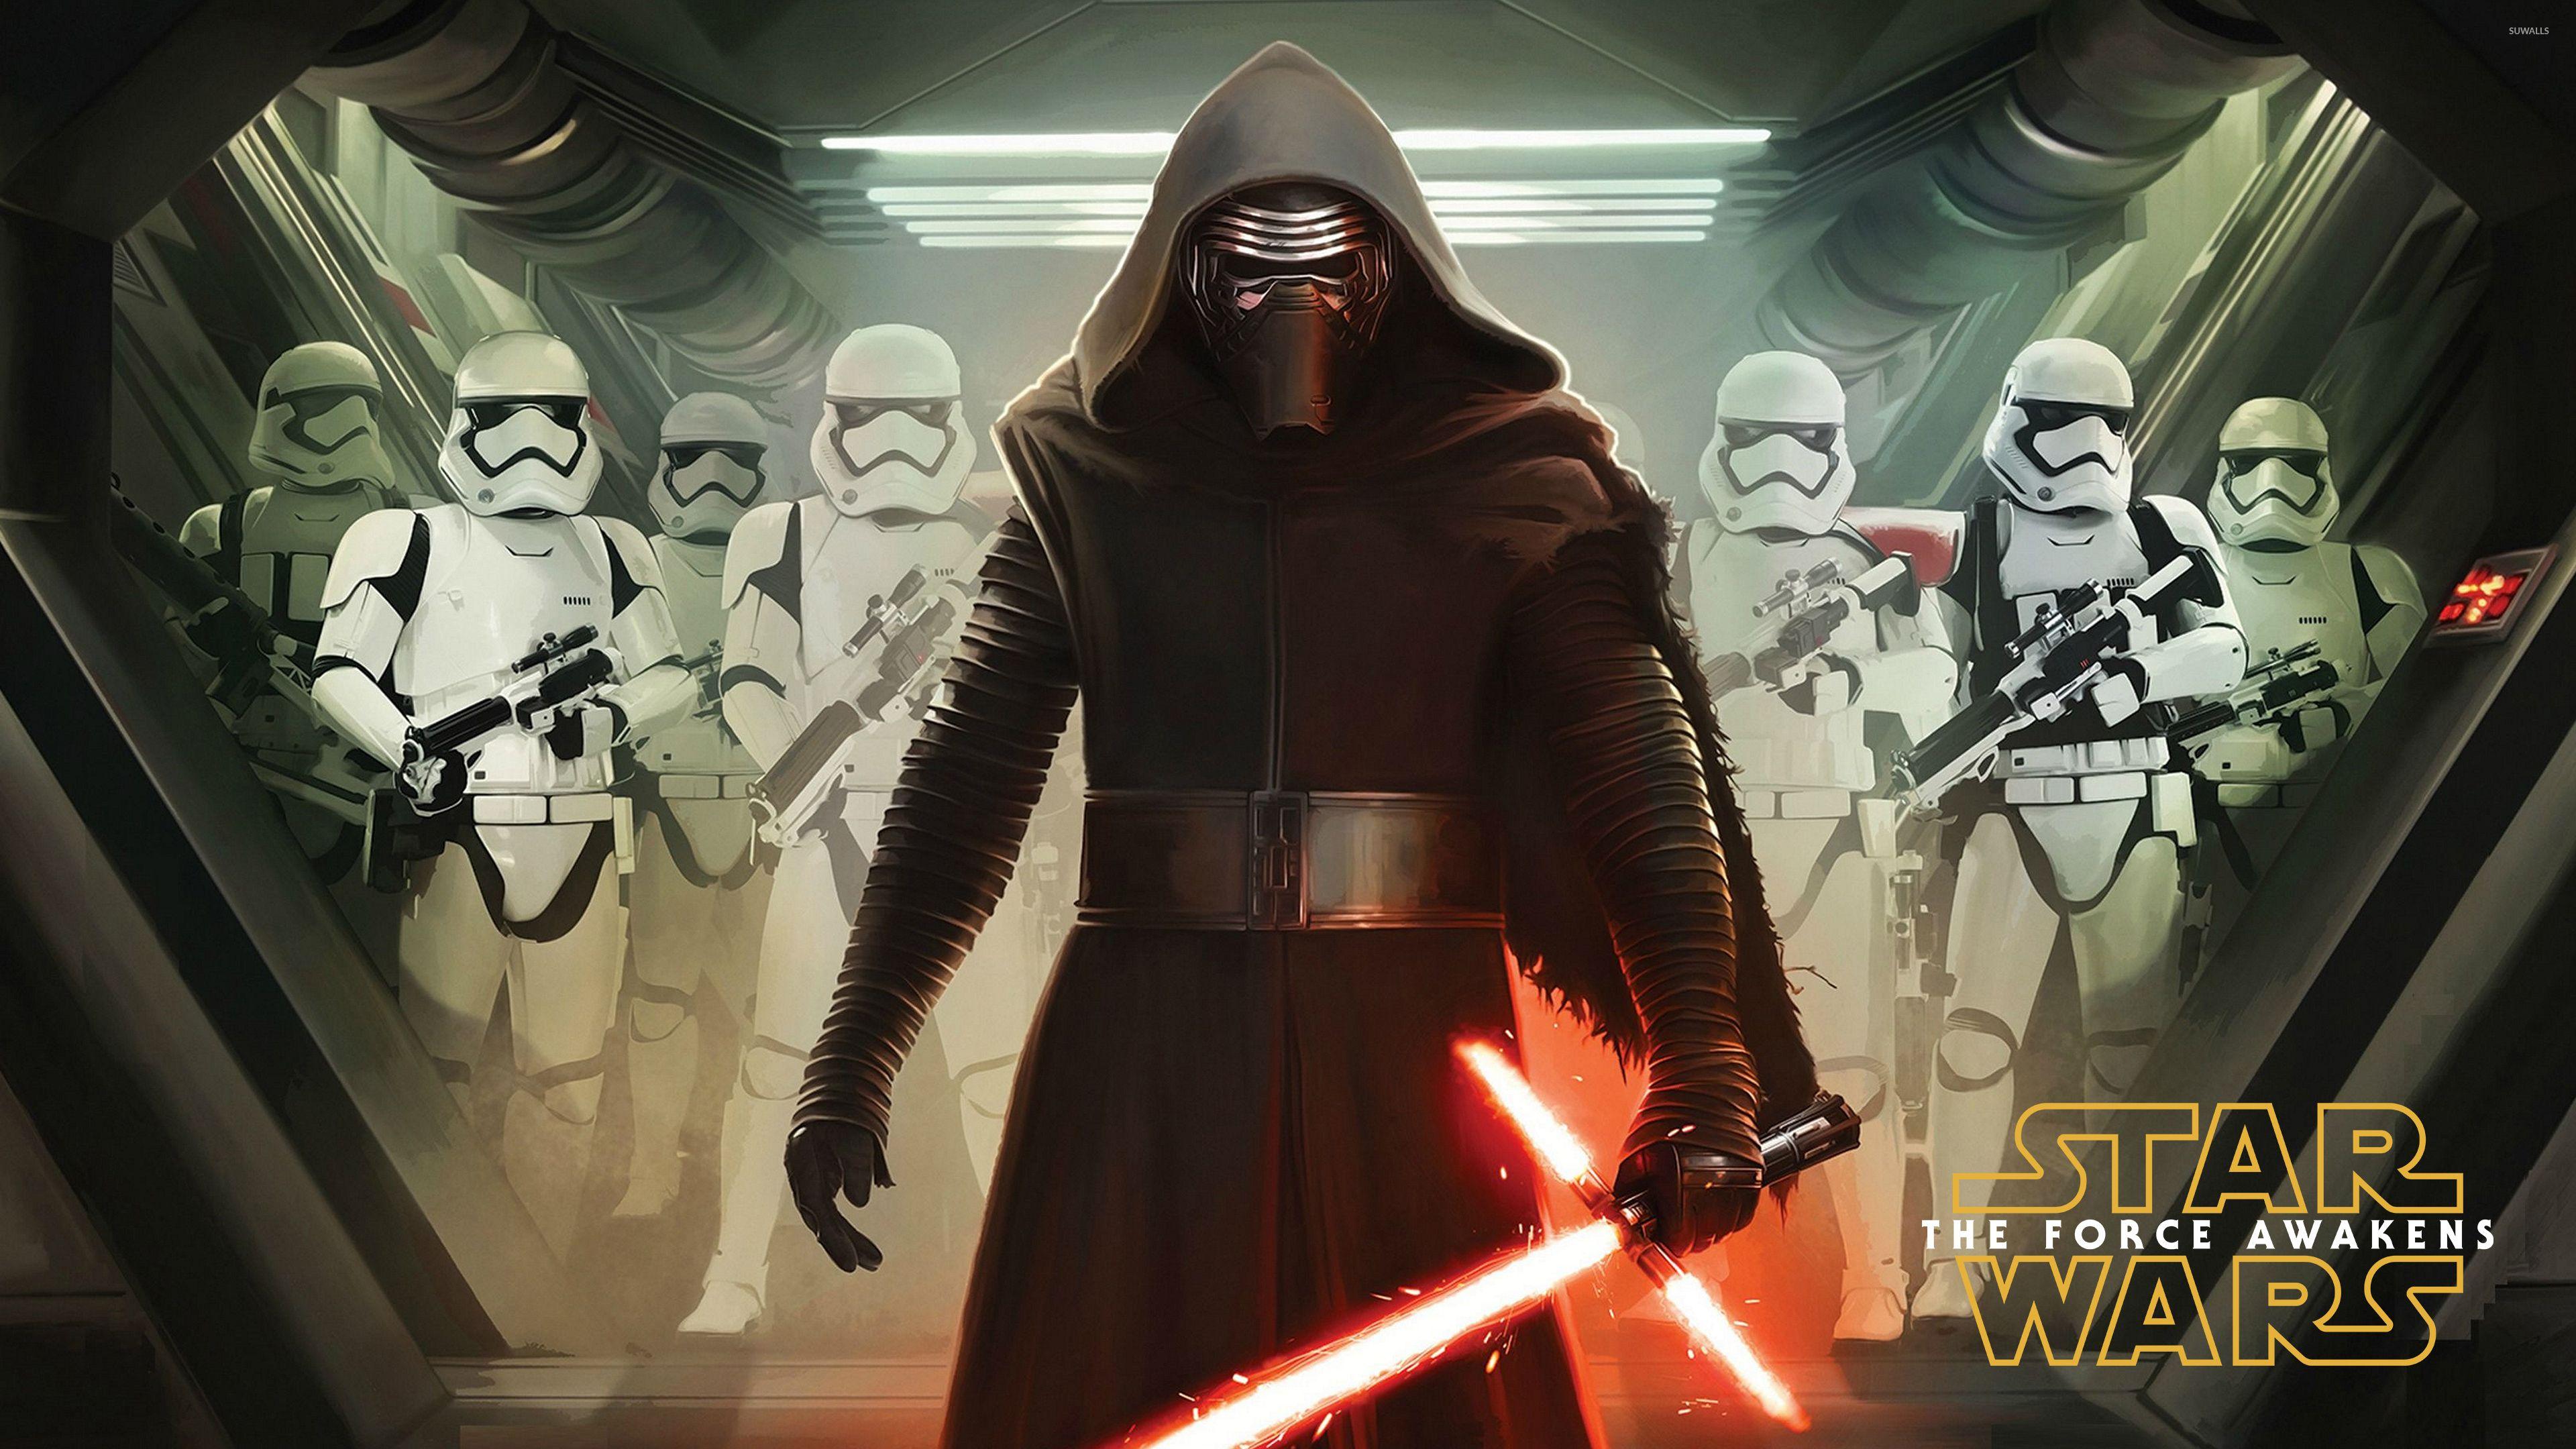 Kylo Ren with stormtroopers Wars: The Force Awakens